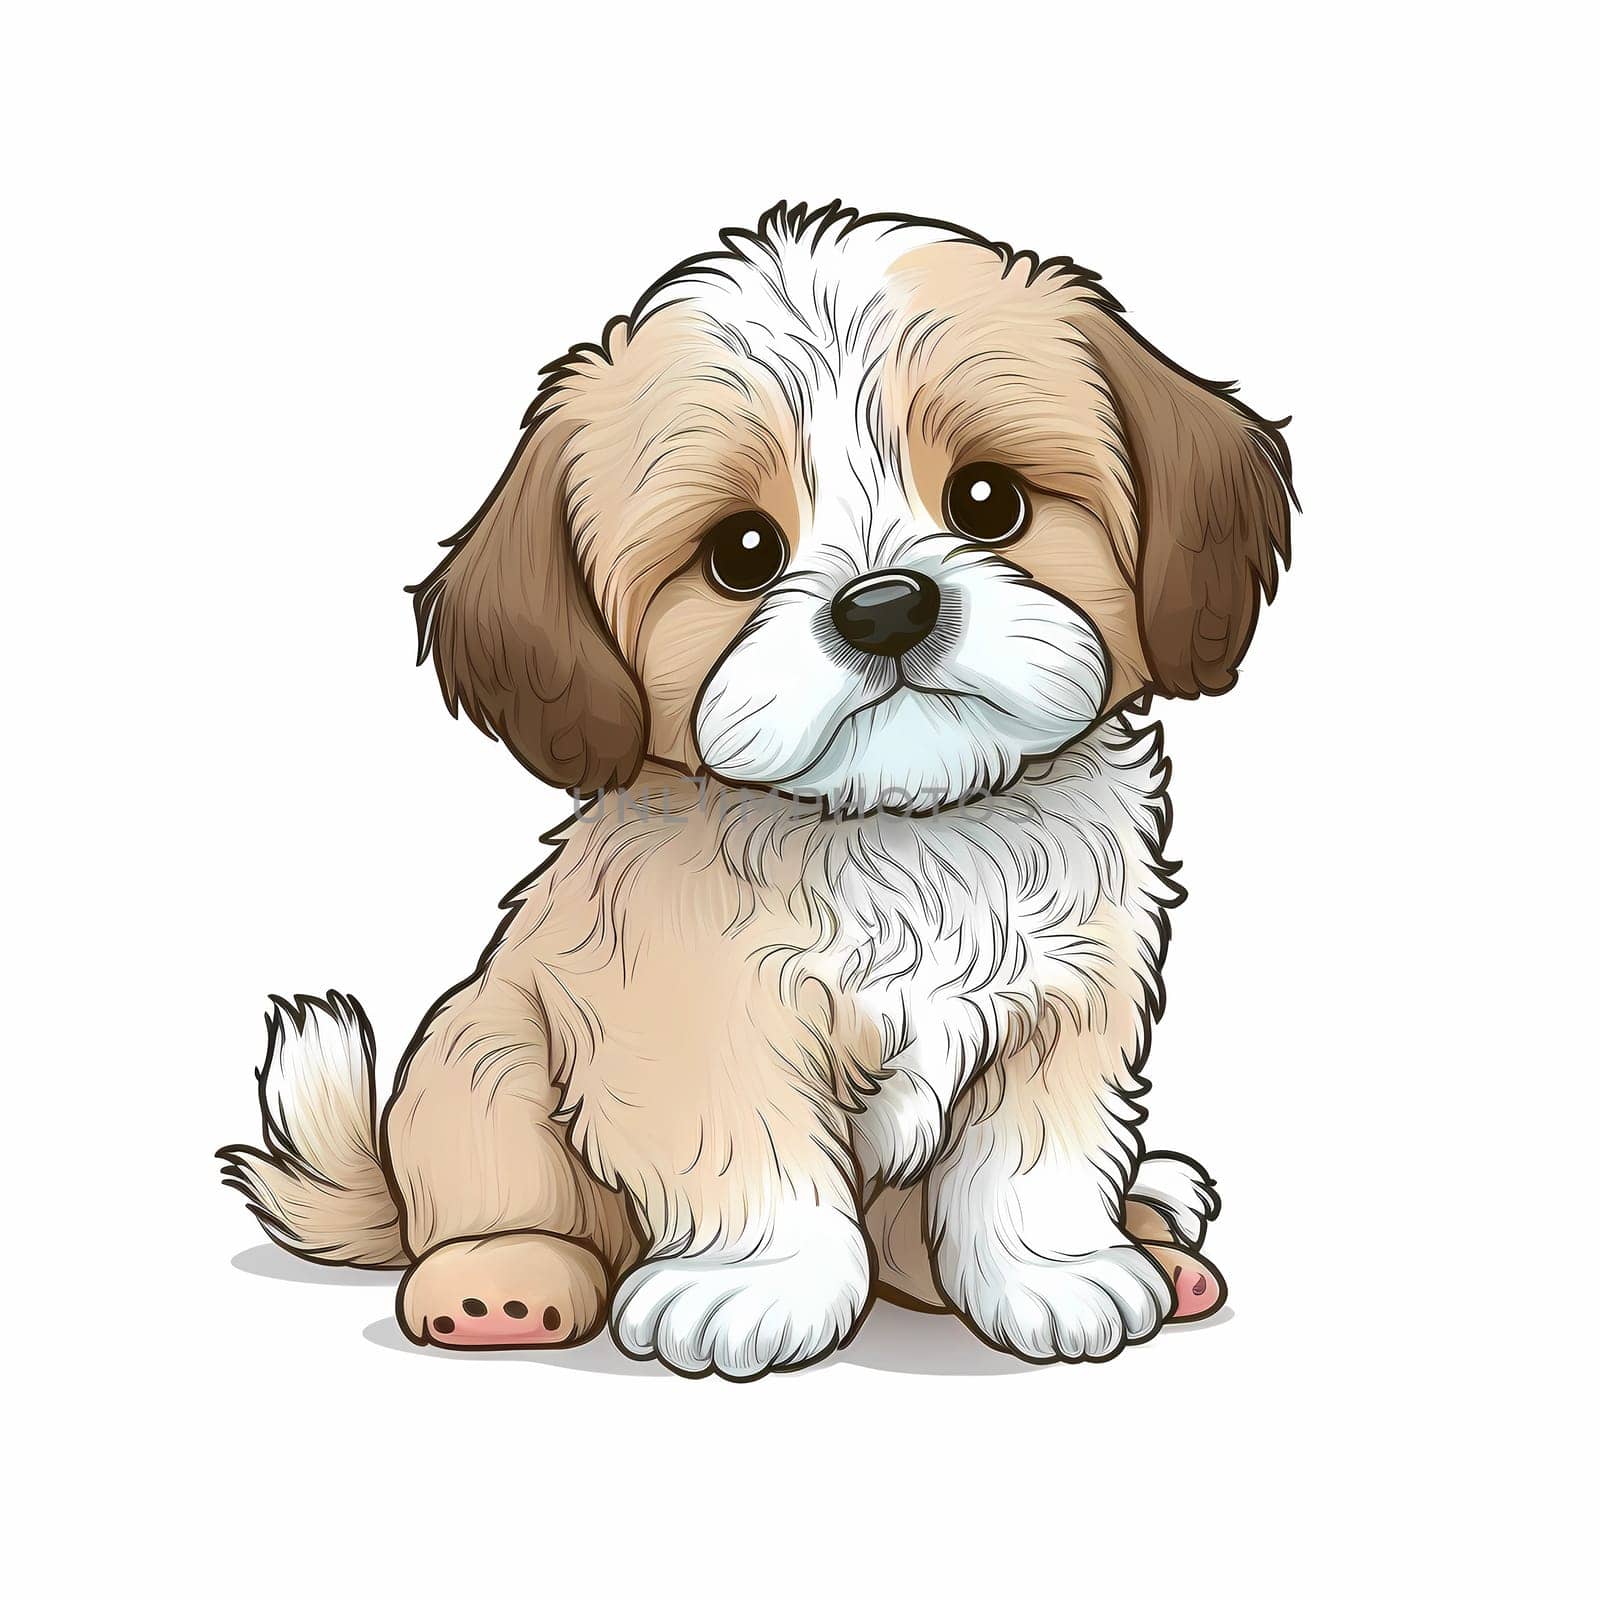 Cute cartoon dog illustration, clipart, sticker. by AndreyKENO